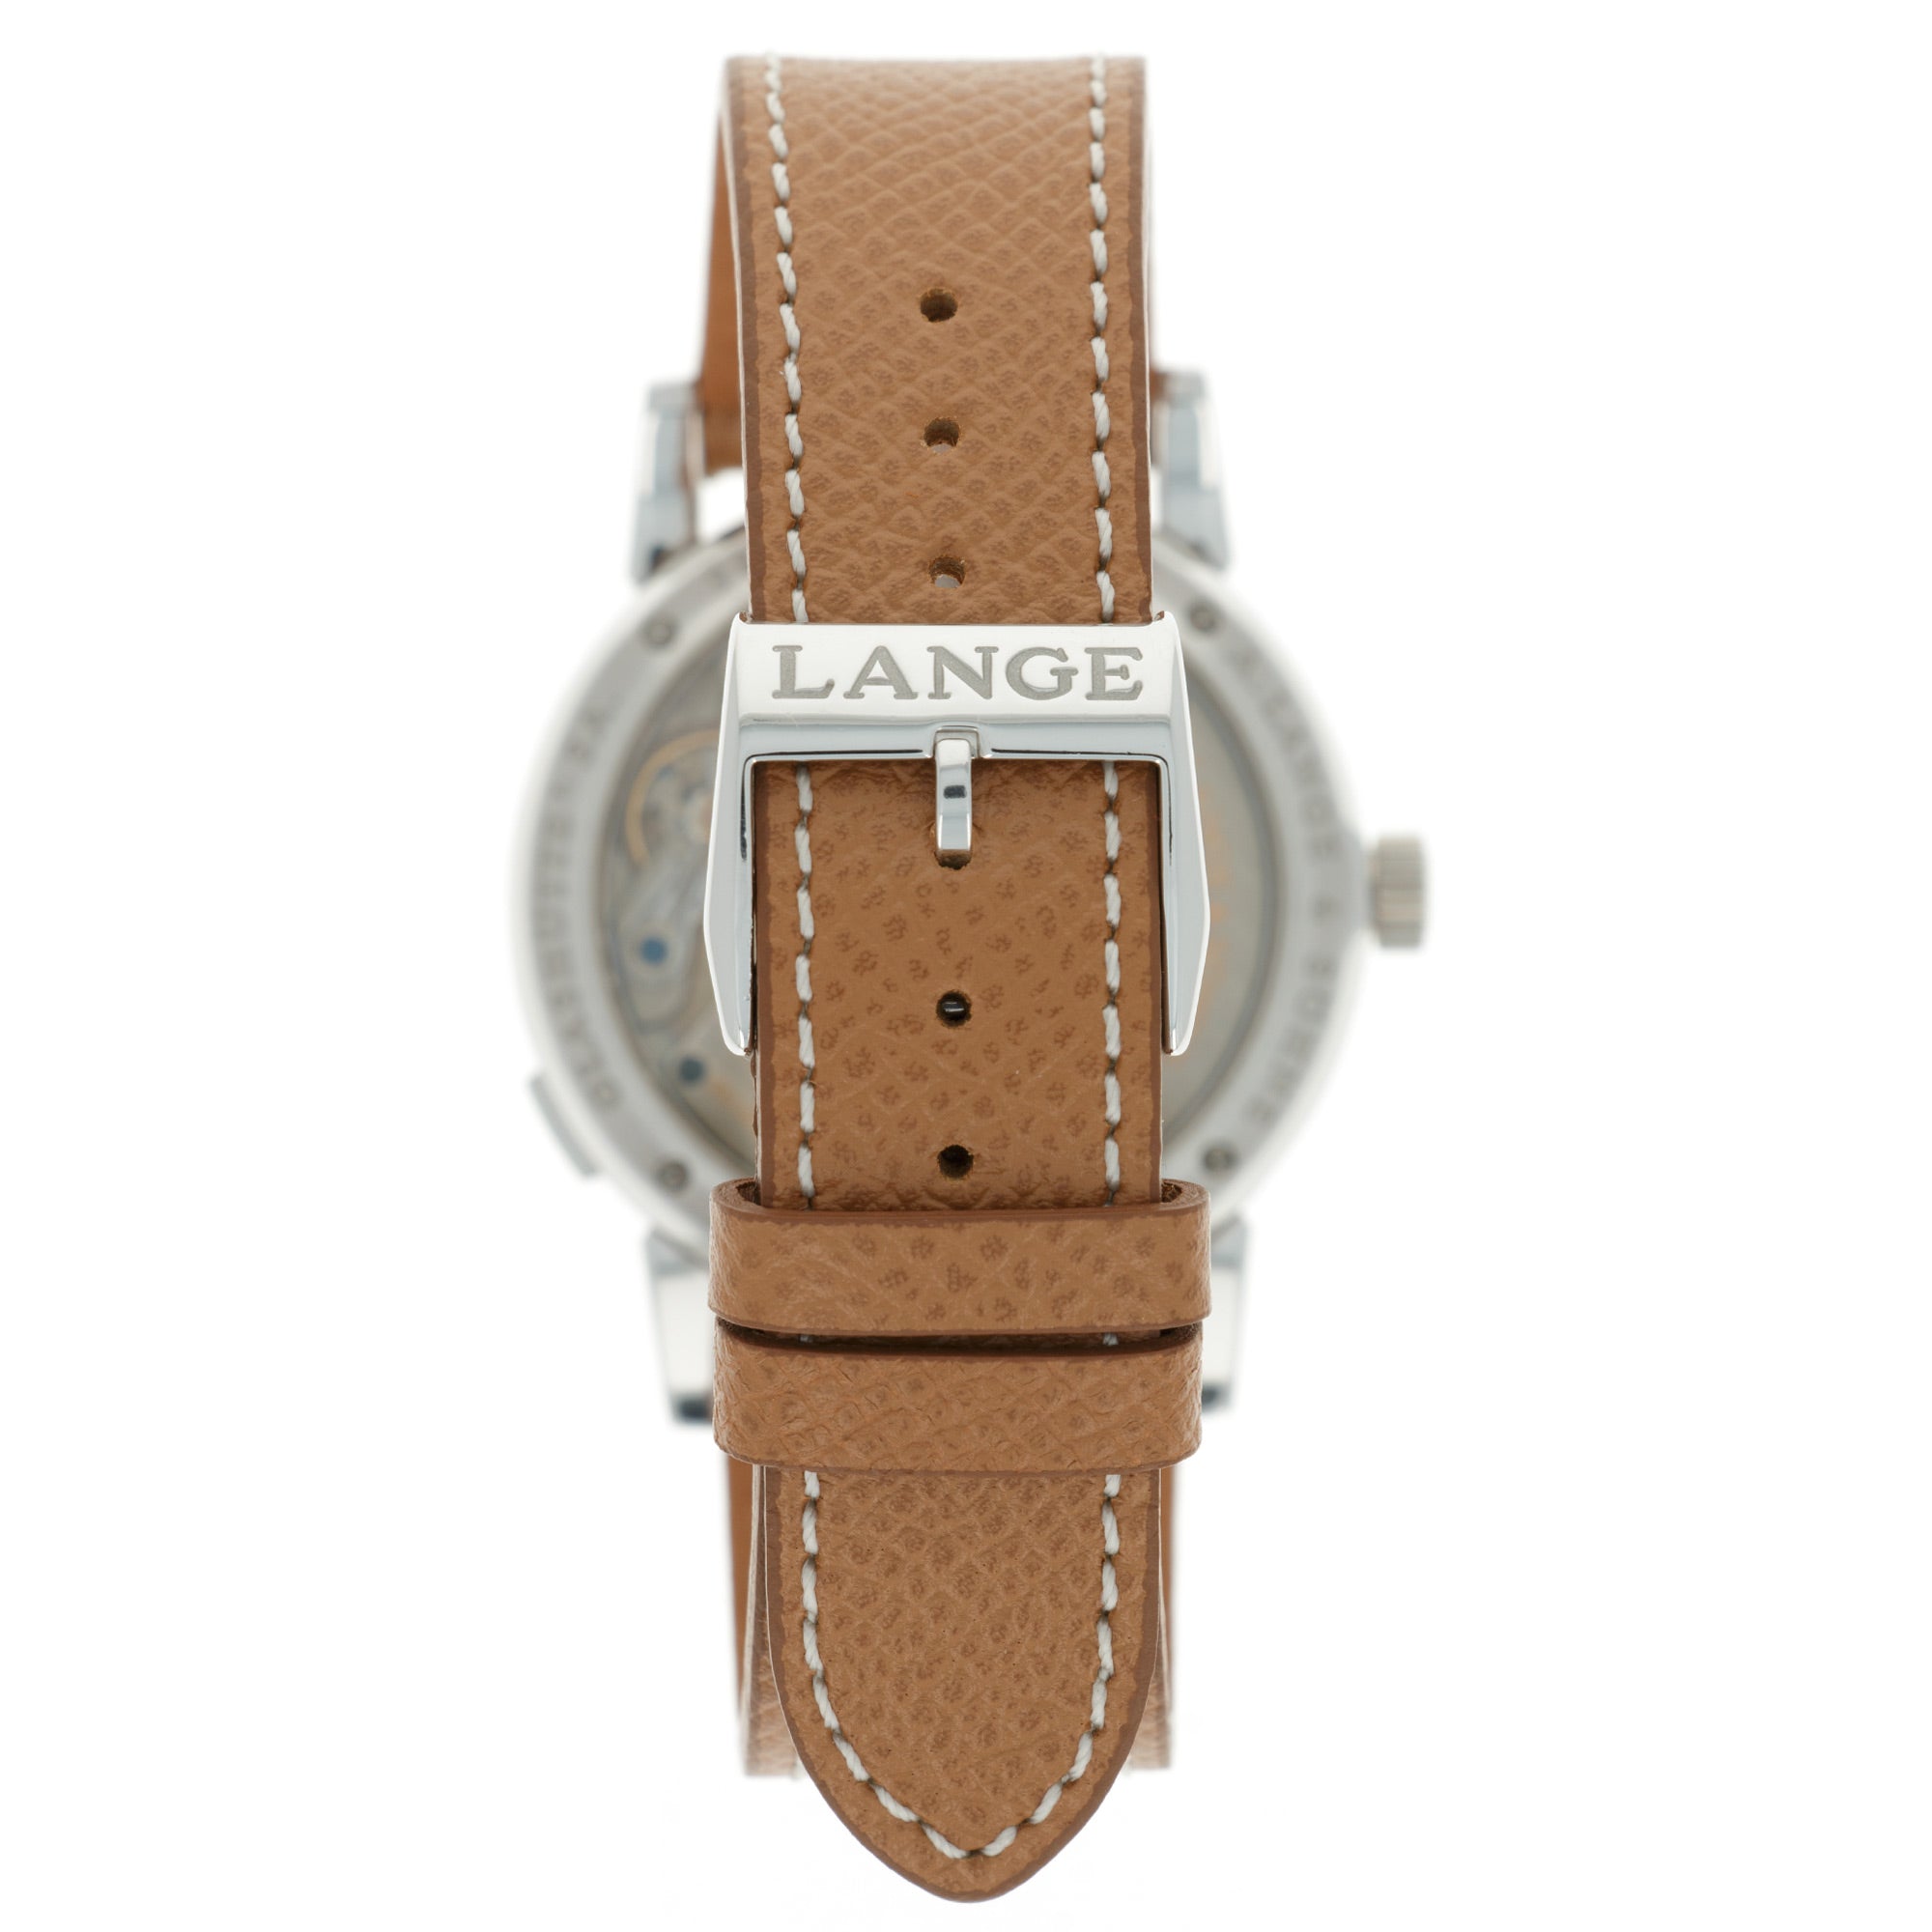 A. Lange &amp; Sohne - A. Lange &amp; Sohne Platinum Darth Lange 1 Ref. 101.035 - The Keystone Watches